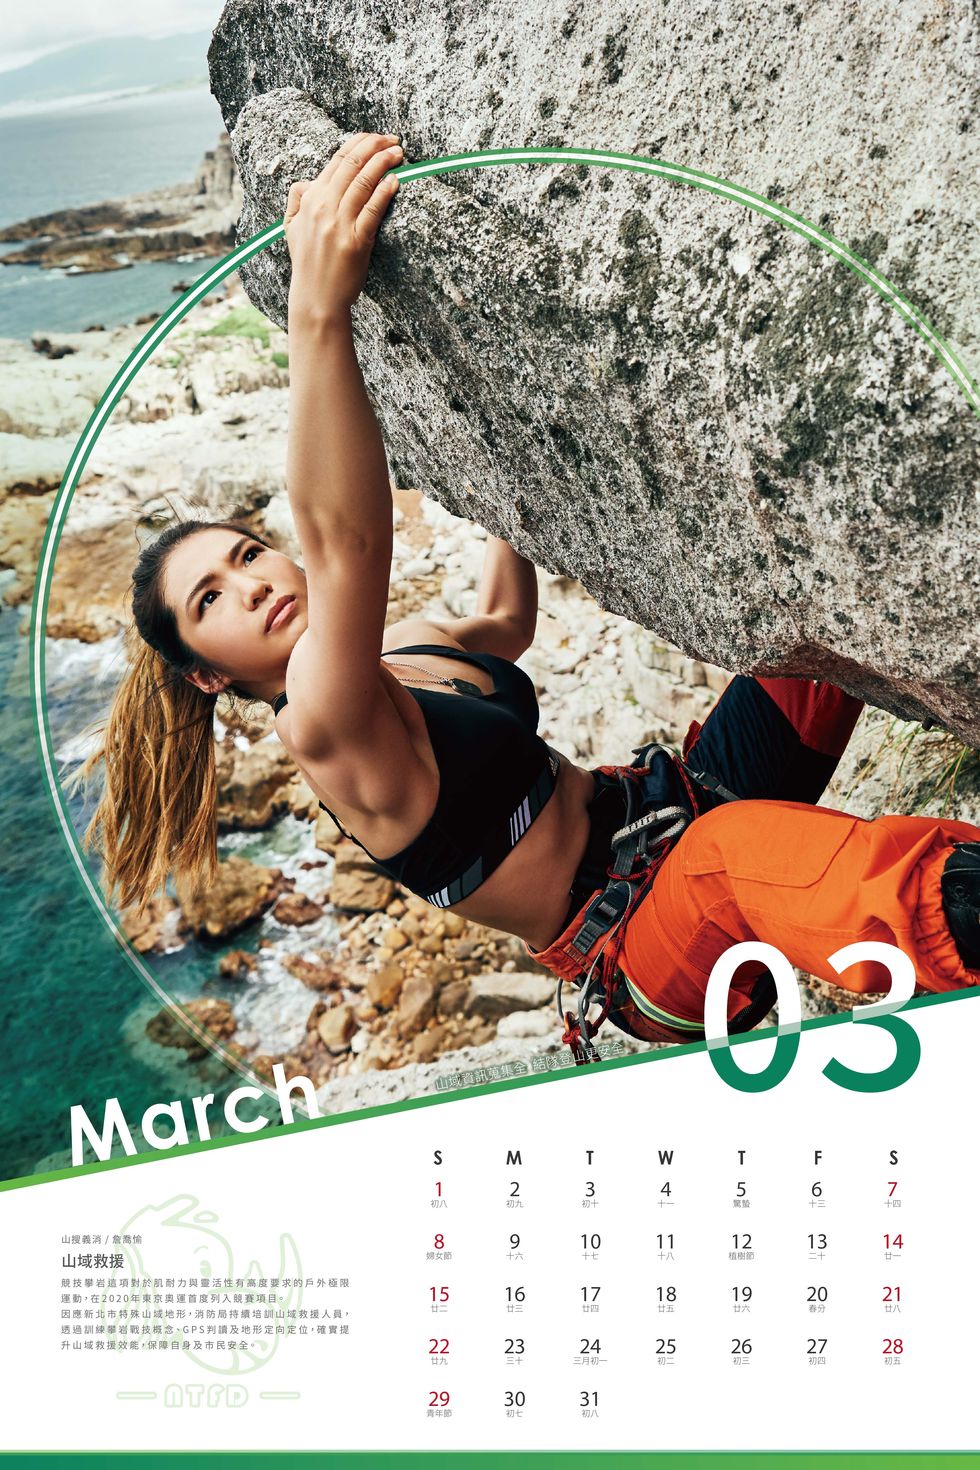 Rock climbing, Adventure, Calendar, Climbing, Poster, Leisure, Advertising, Bouldering, Fun, Recreation, 